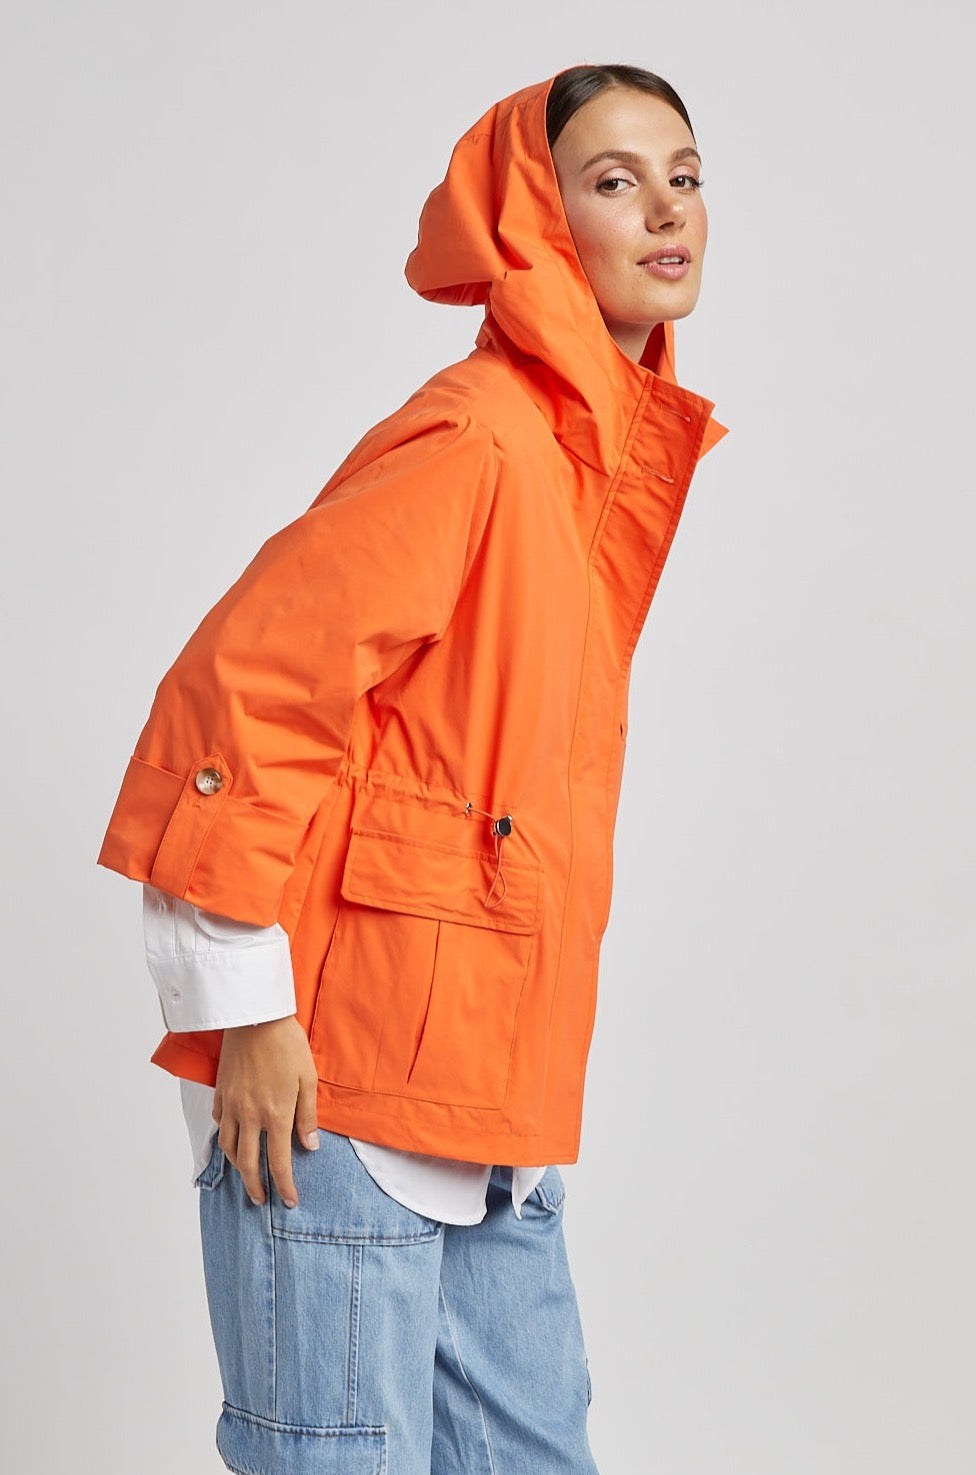 Adroit Atelier Roseline Hooded Anorak Jacket - Tangerine